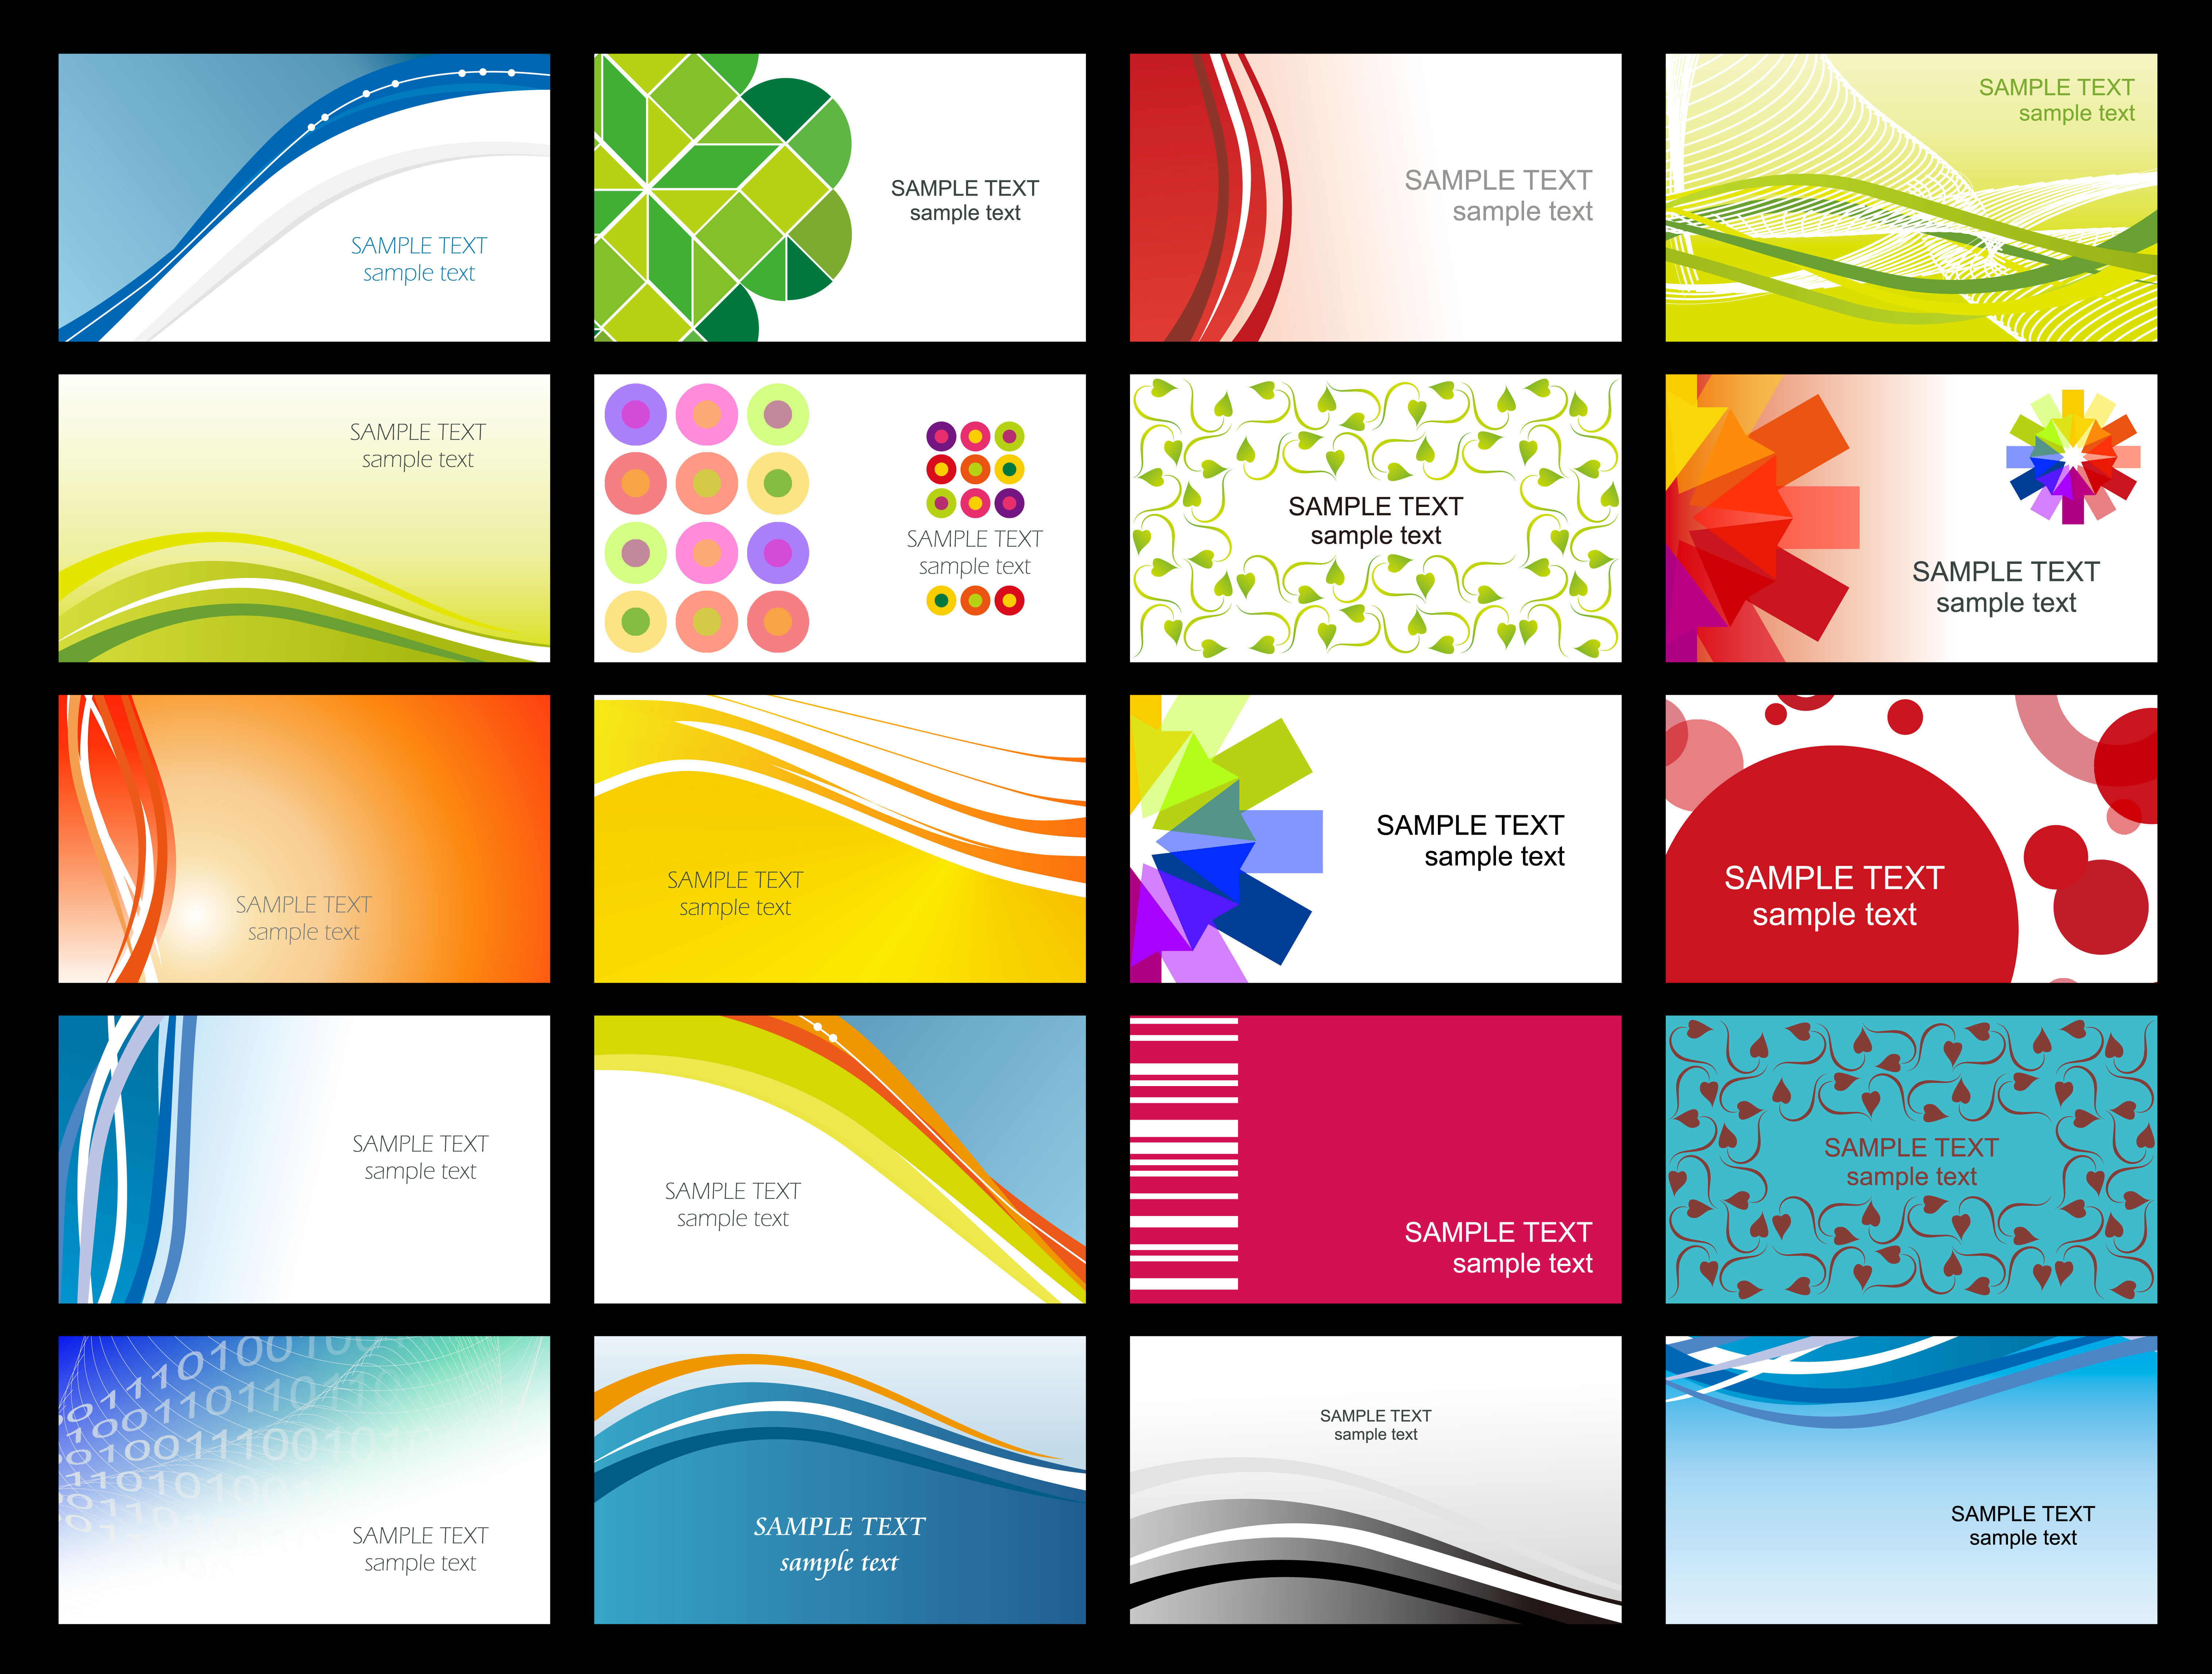 Free Printable Business Card Templates Sample | Get Sniffer Throughout Free Template Business Cards To Print